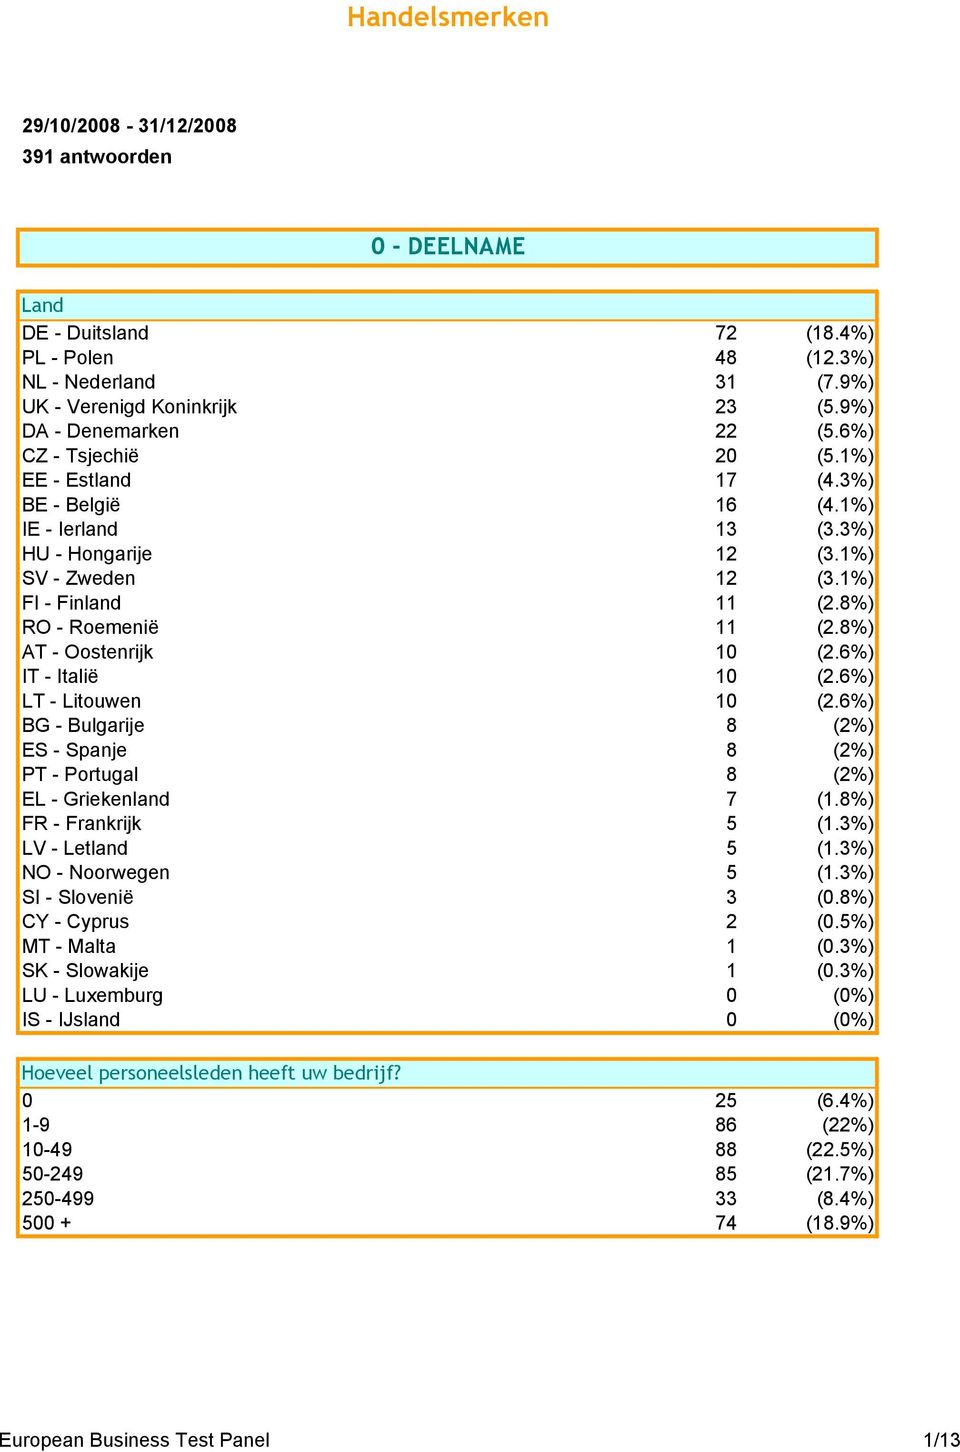 8%) AT - Oostenrijk 10 (2.6%) IT - Italië 10 (2.6%) LT - Litouwen 10 (2.6%) BG - Bulgarije 8 (2%) ES - Spanje 8 (2%) PT - Portugal 8 (2%) EL - Griekenland 7 (1.8%) FR - Frankrijk 5 (1.